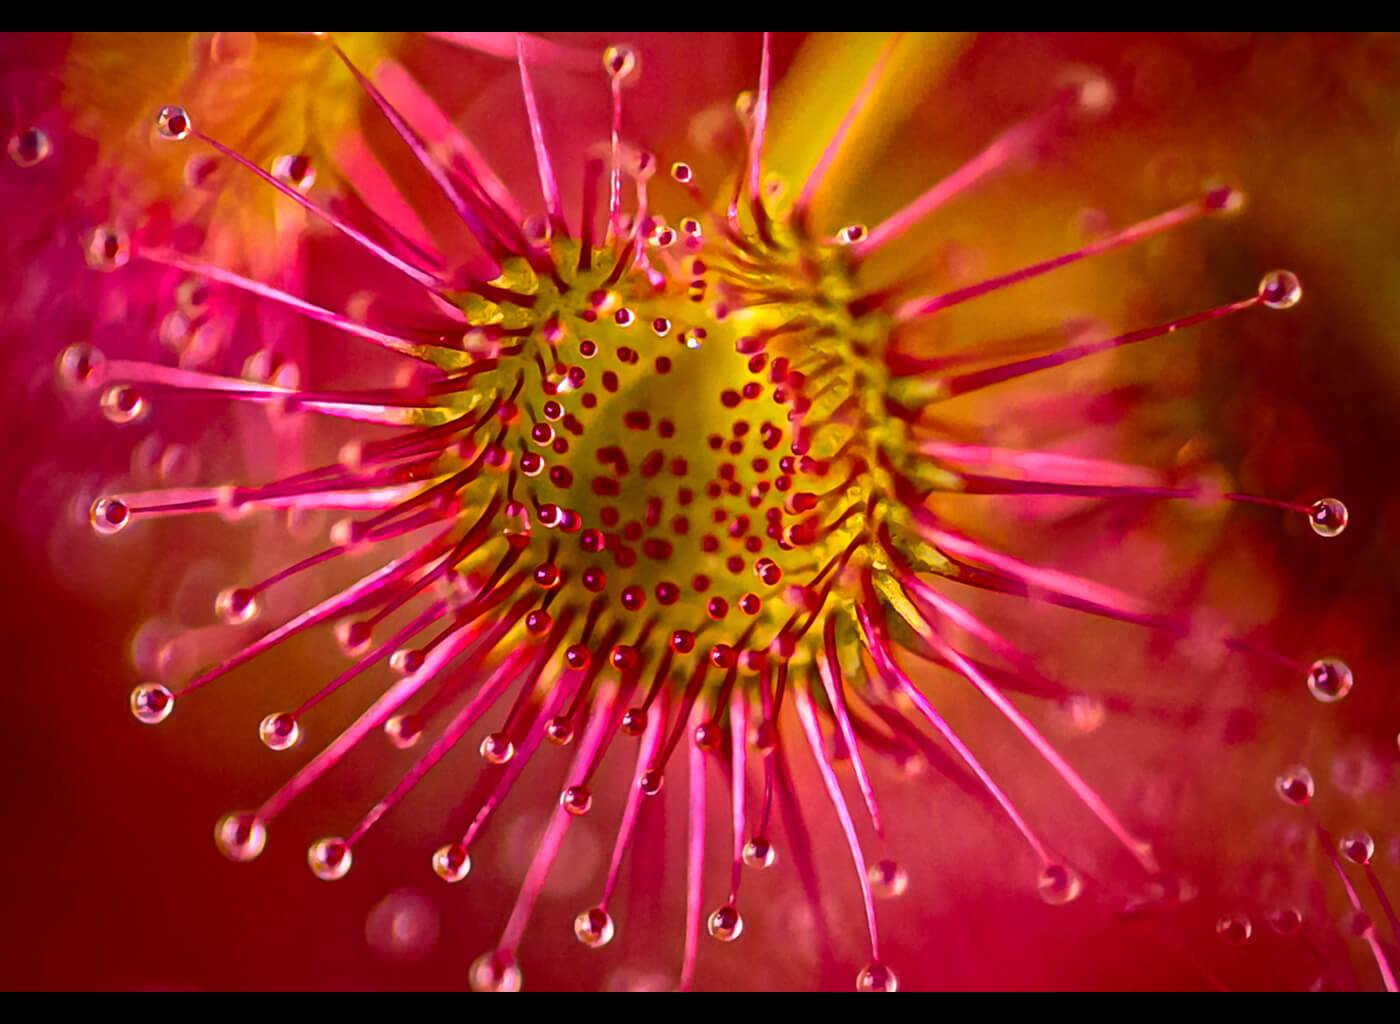 Flower macro photography - Canon Oceania Grants